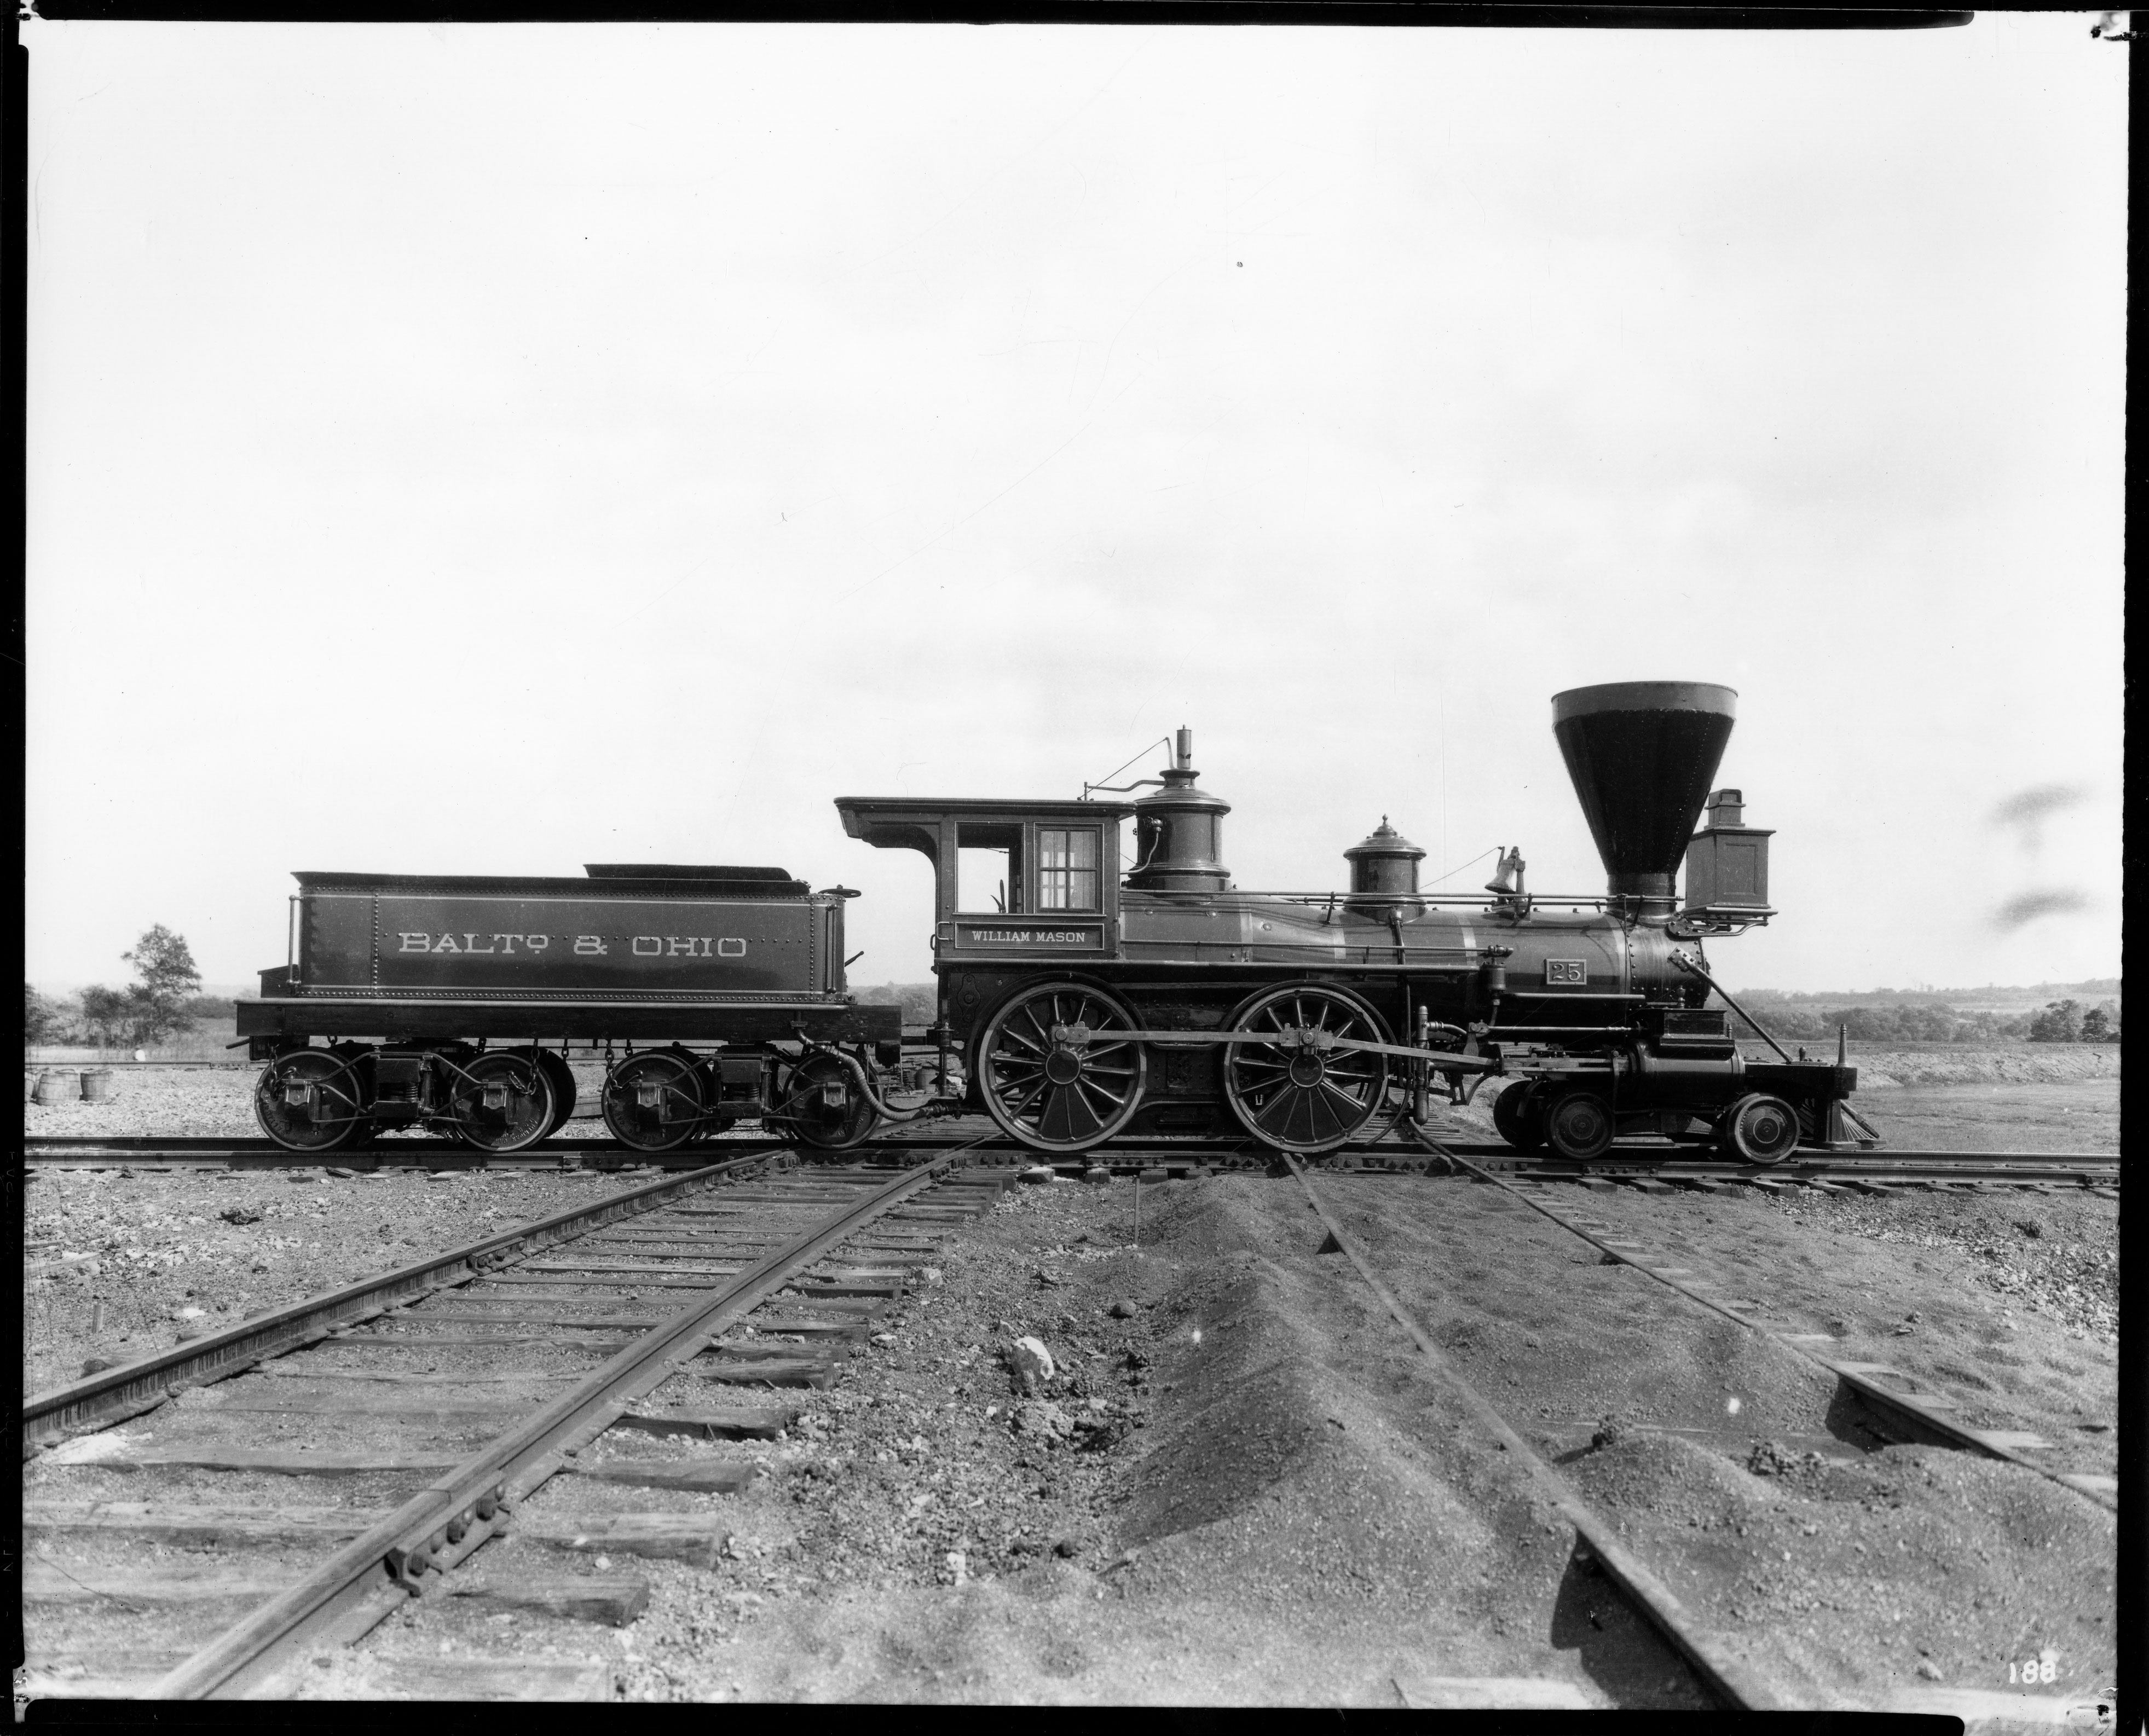 B&O Railroad